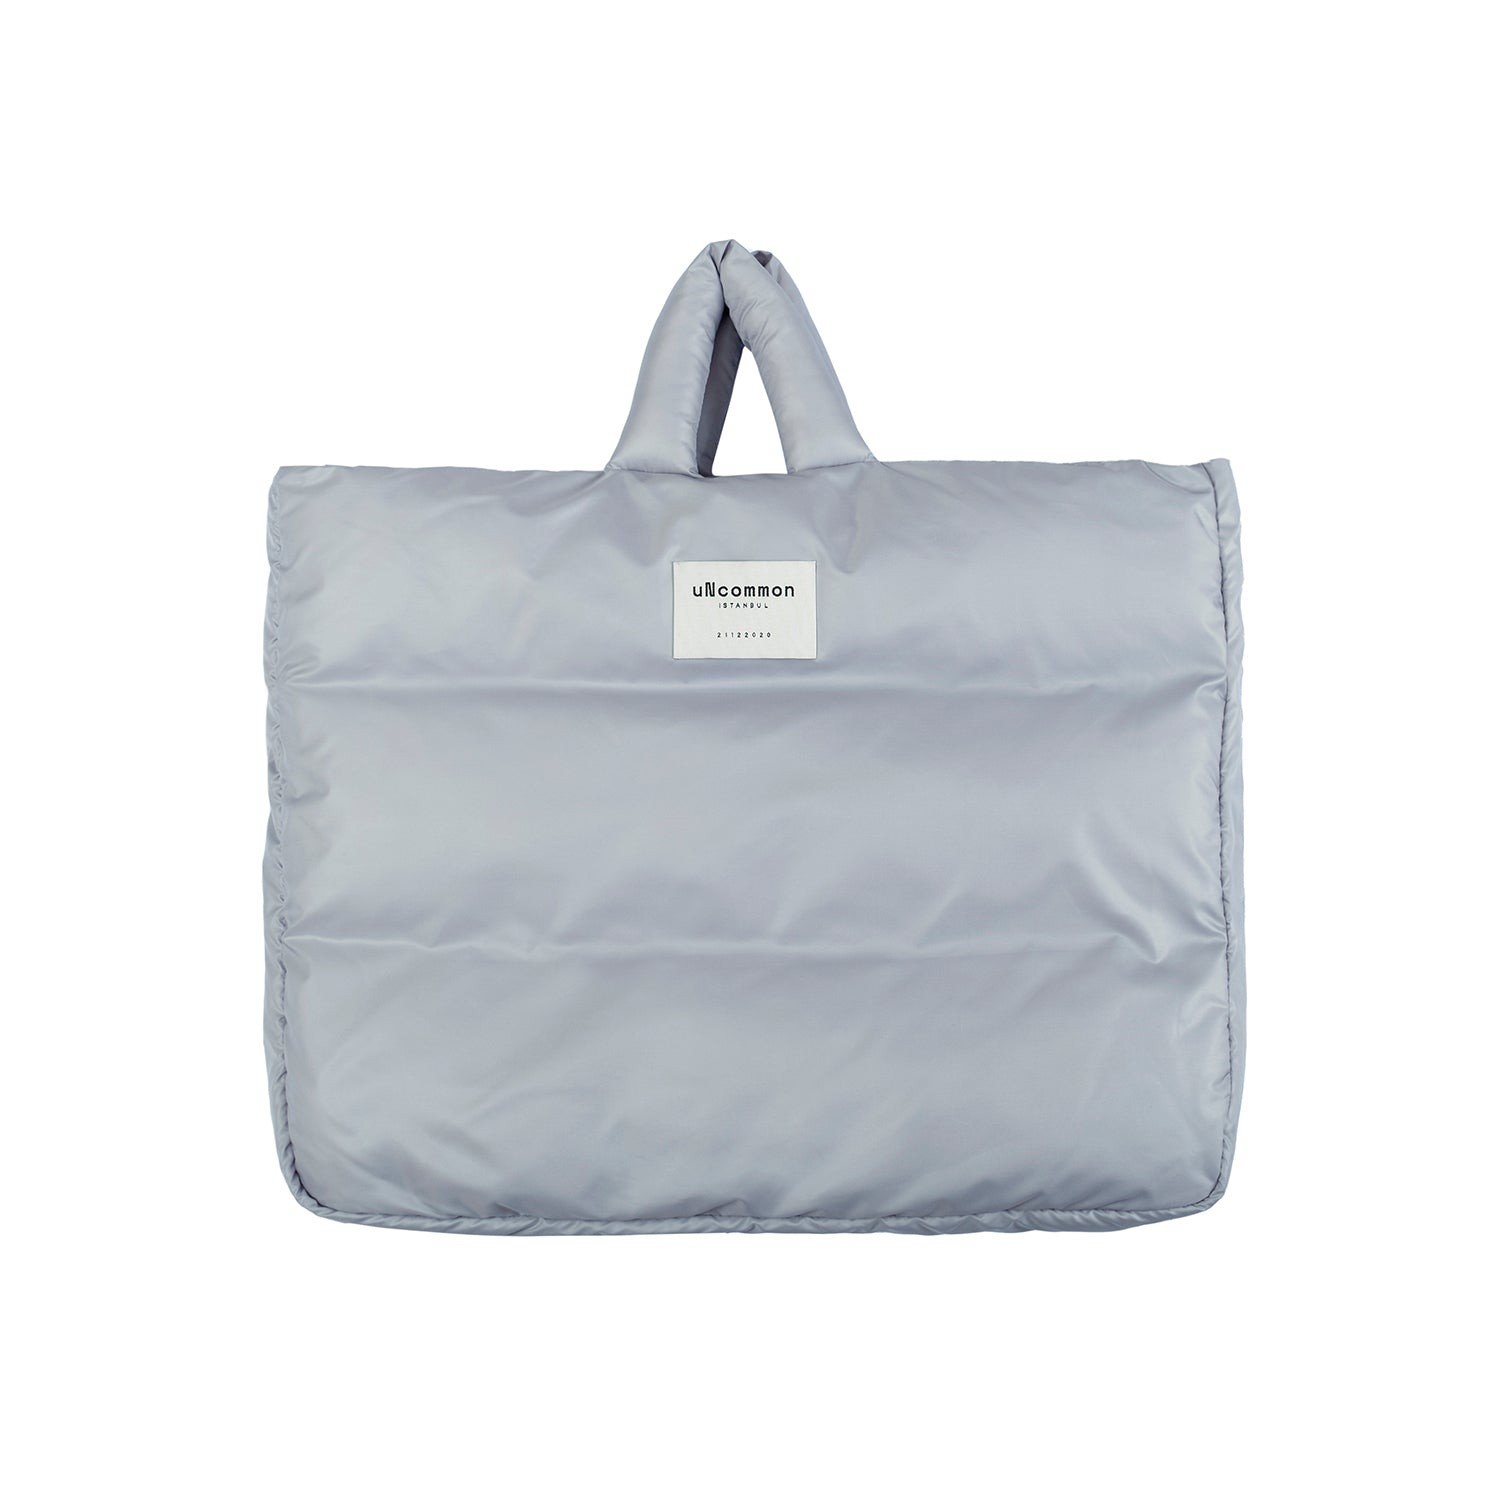 uNcommon Puffy Tote Bag Gray